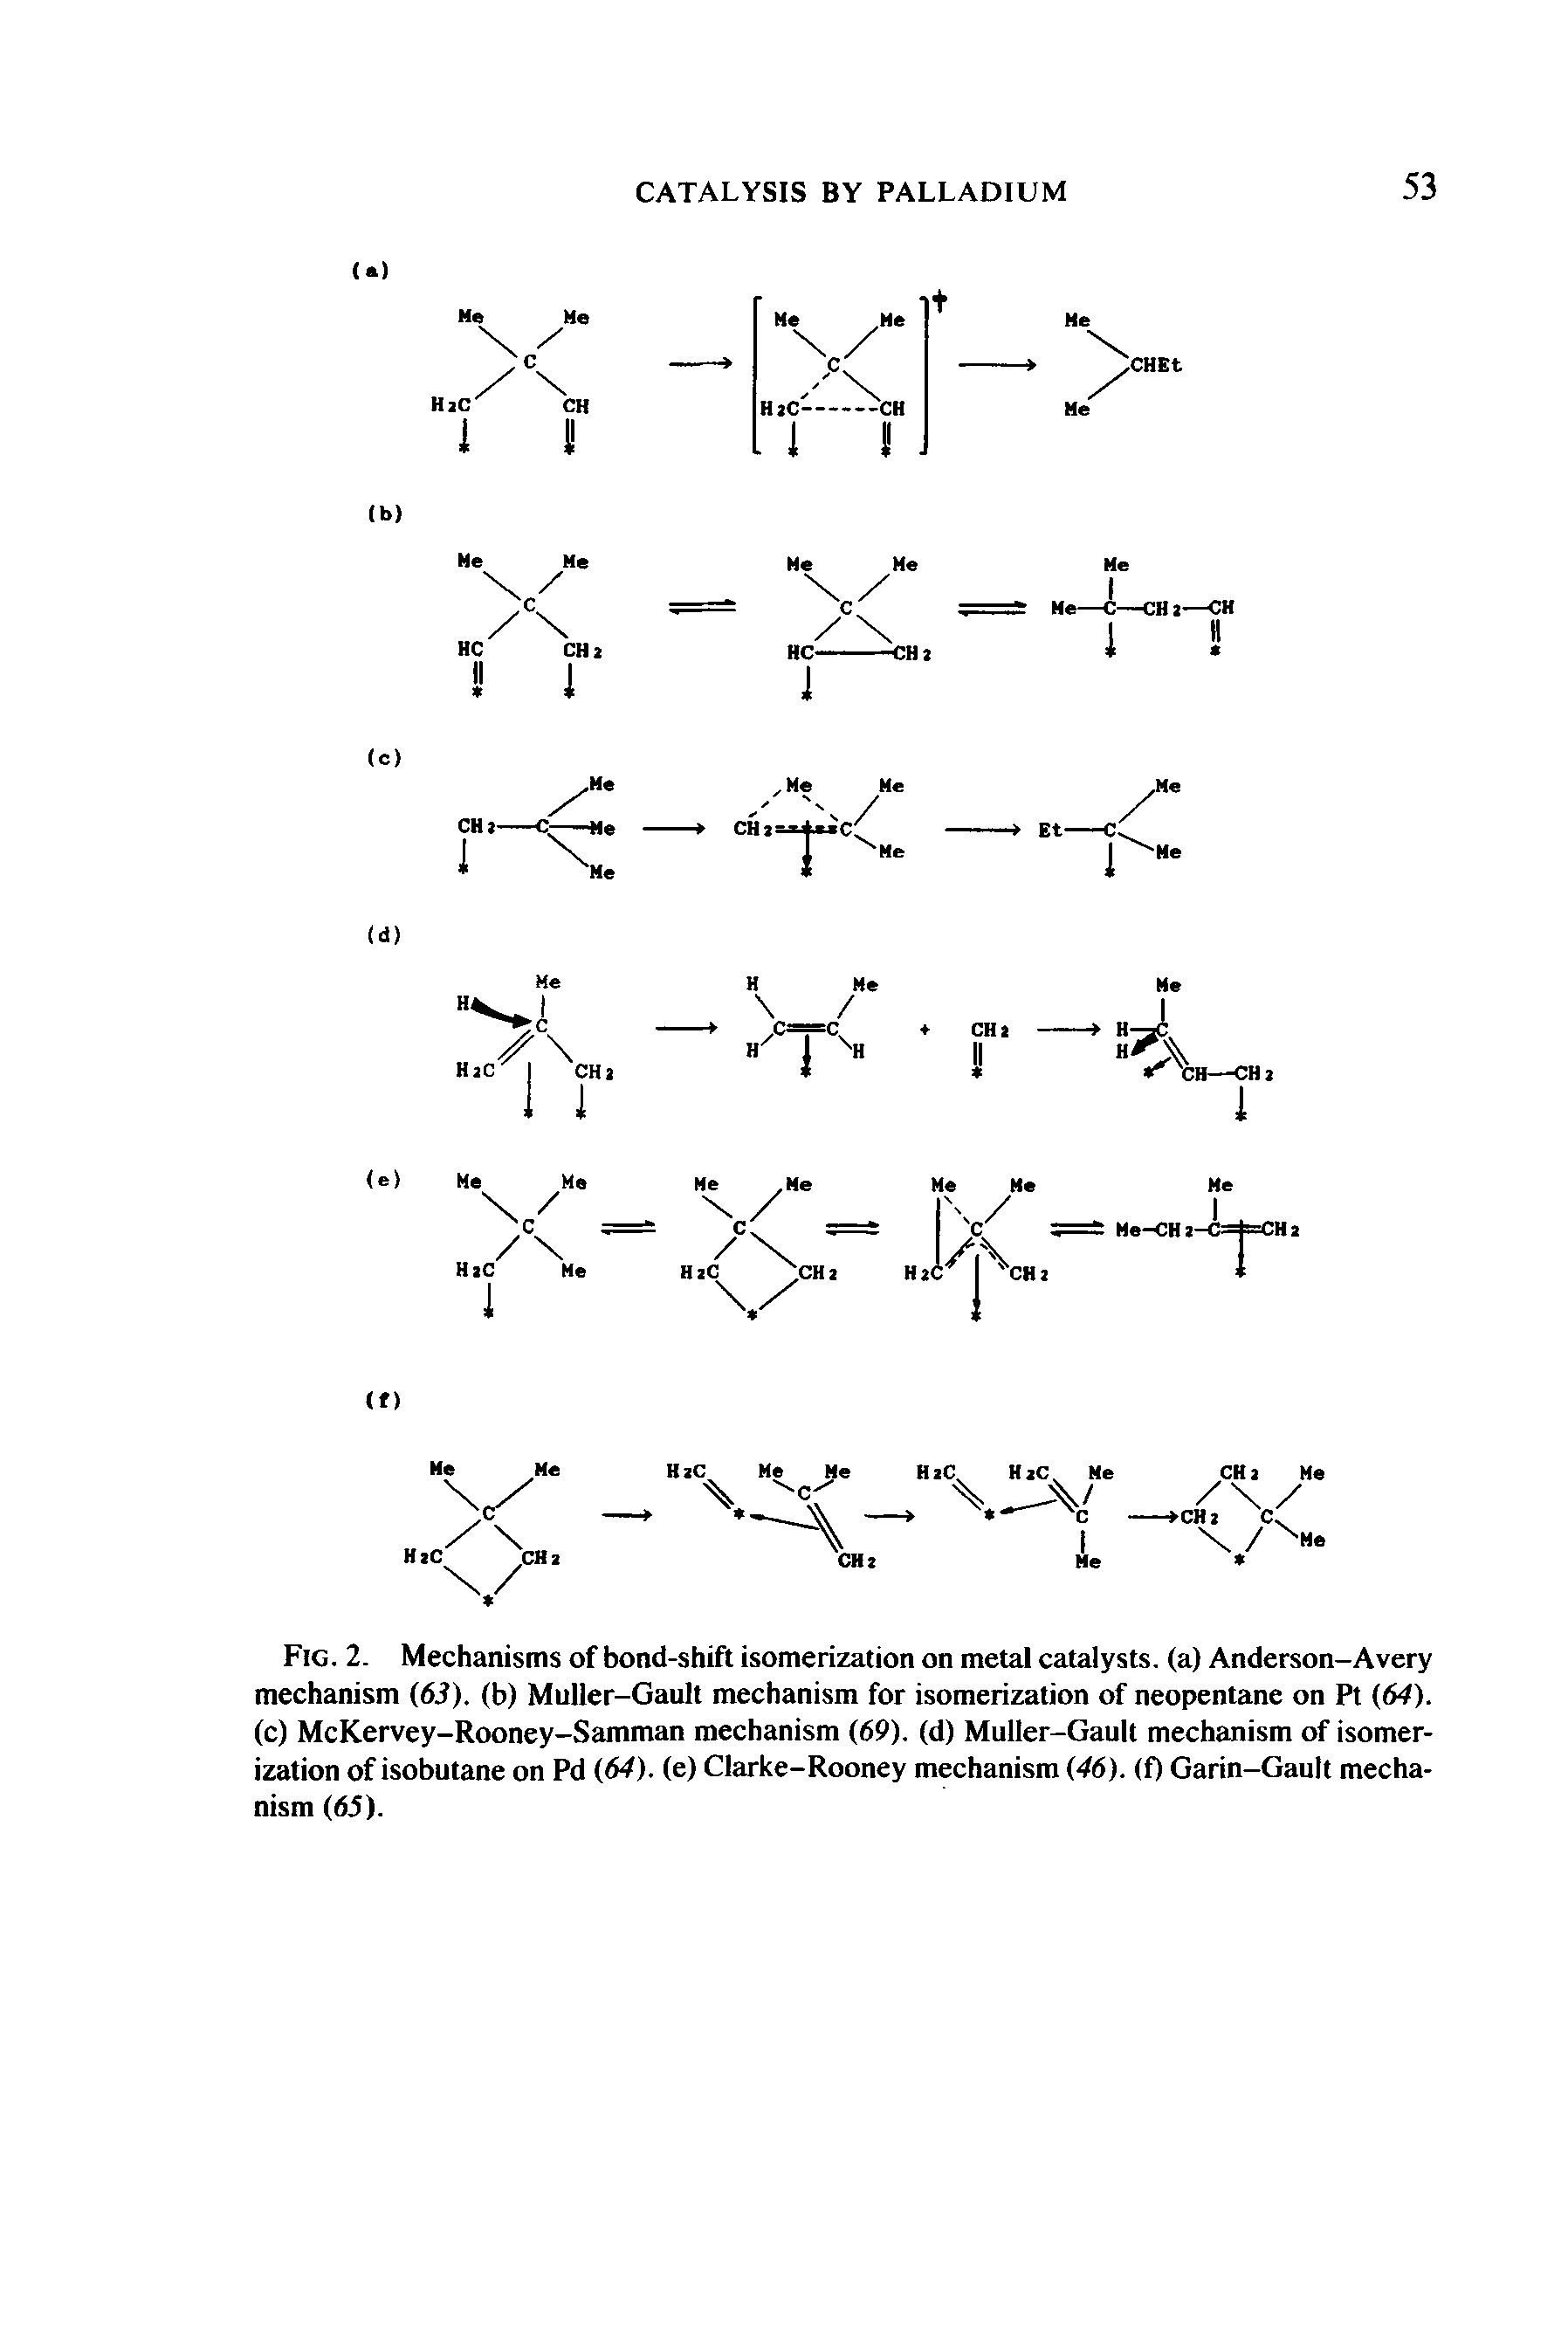 Fig. 2. Mechanisms of bond-shift isomerization on metal catalysts, (a) Anderson-Avery mechanism (63). (b) Muller-Gault mechanism for isomerization of neopentane on Pt (64). (c) McKervey-Rooney-Samman mechanism (69). (d) Muller-Gault mechanism of isomerization of isobutane on Pd (64). (e) Clarke-Rooney mechanism (46). (f) Garin-Gault mechanism (65).